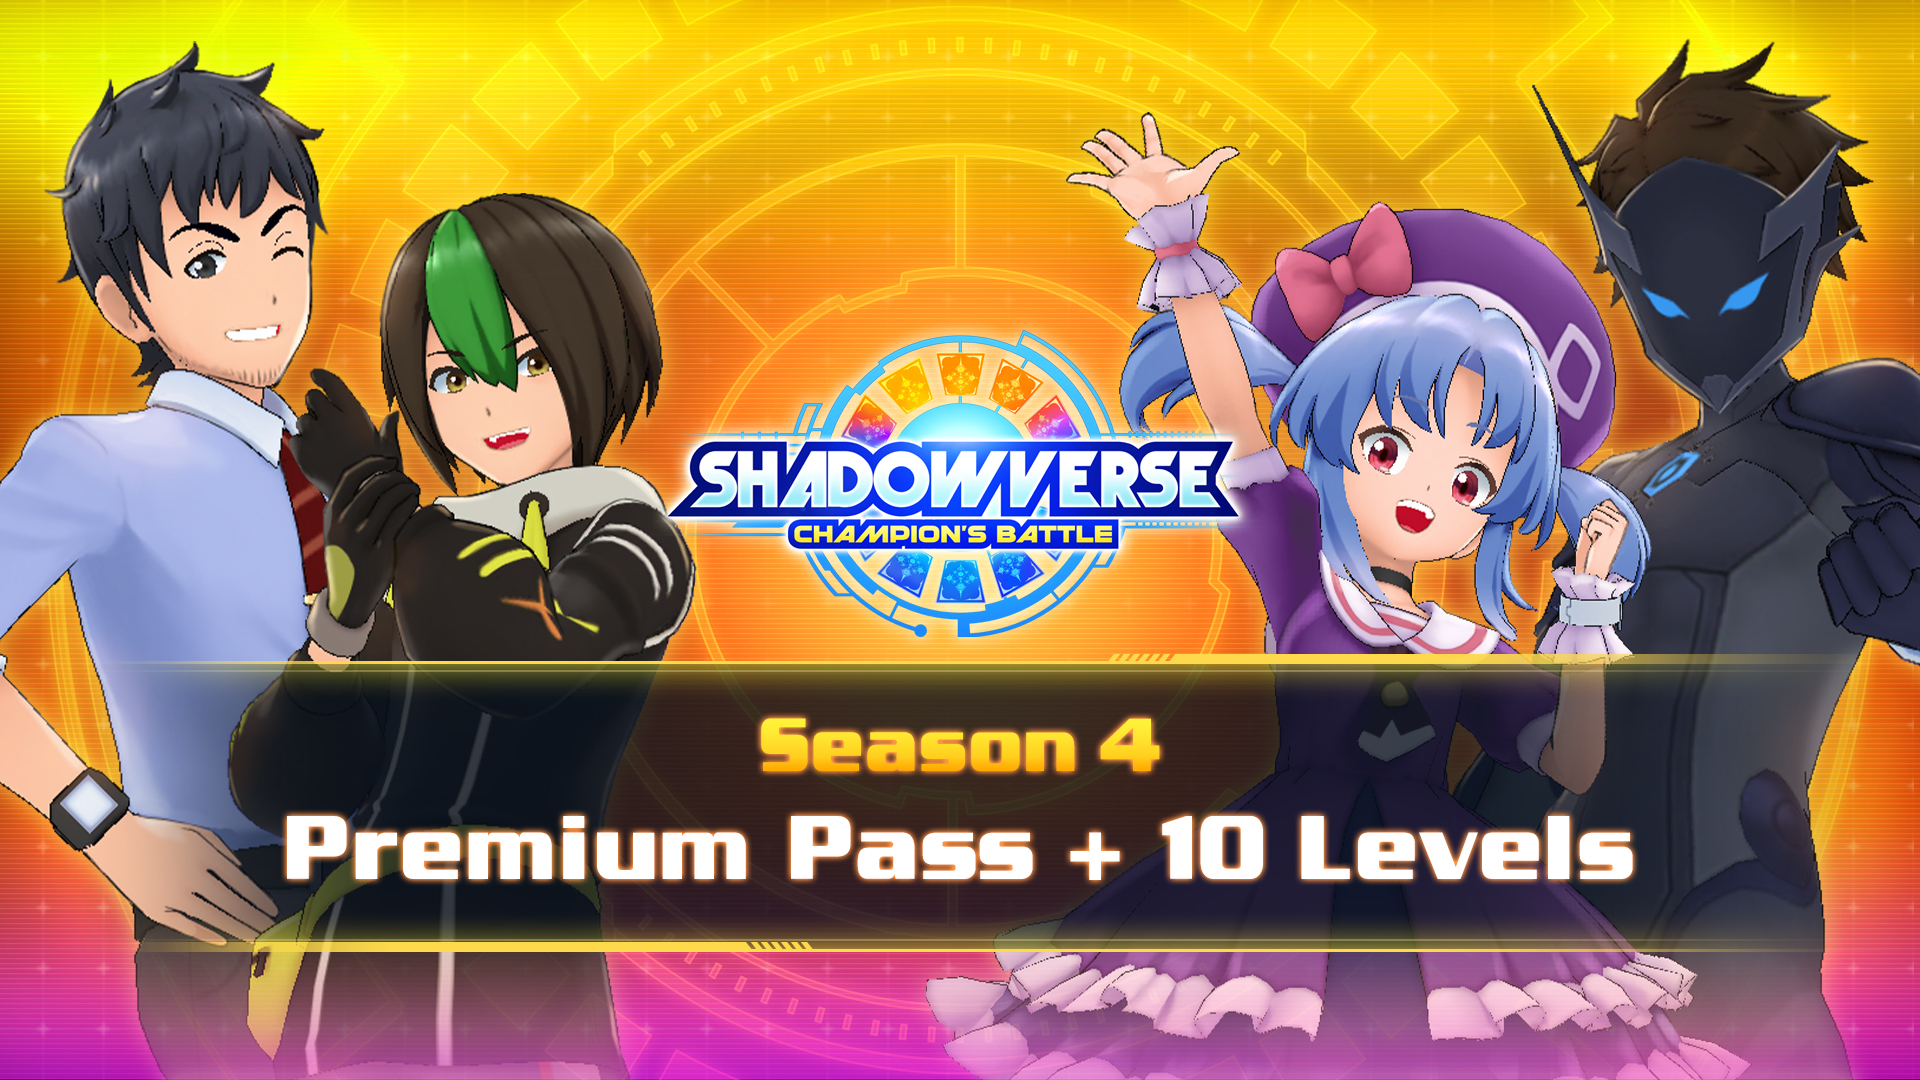 Season 4 Premium Pass + 10 Levels